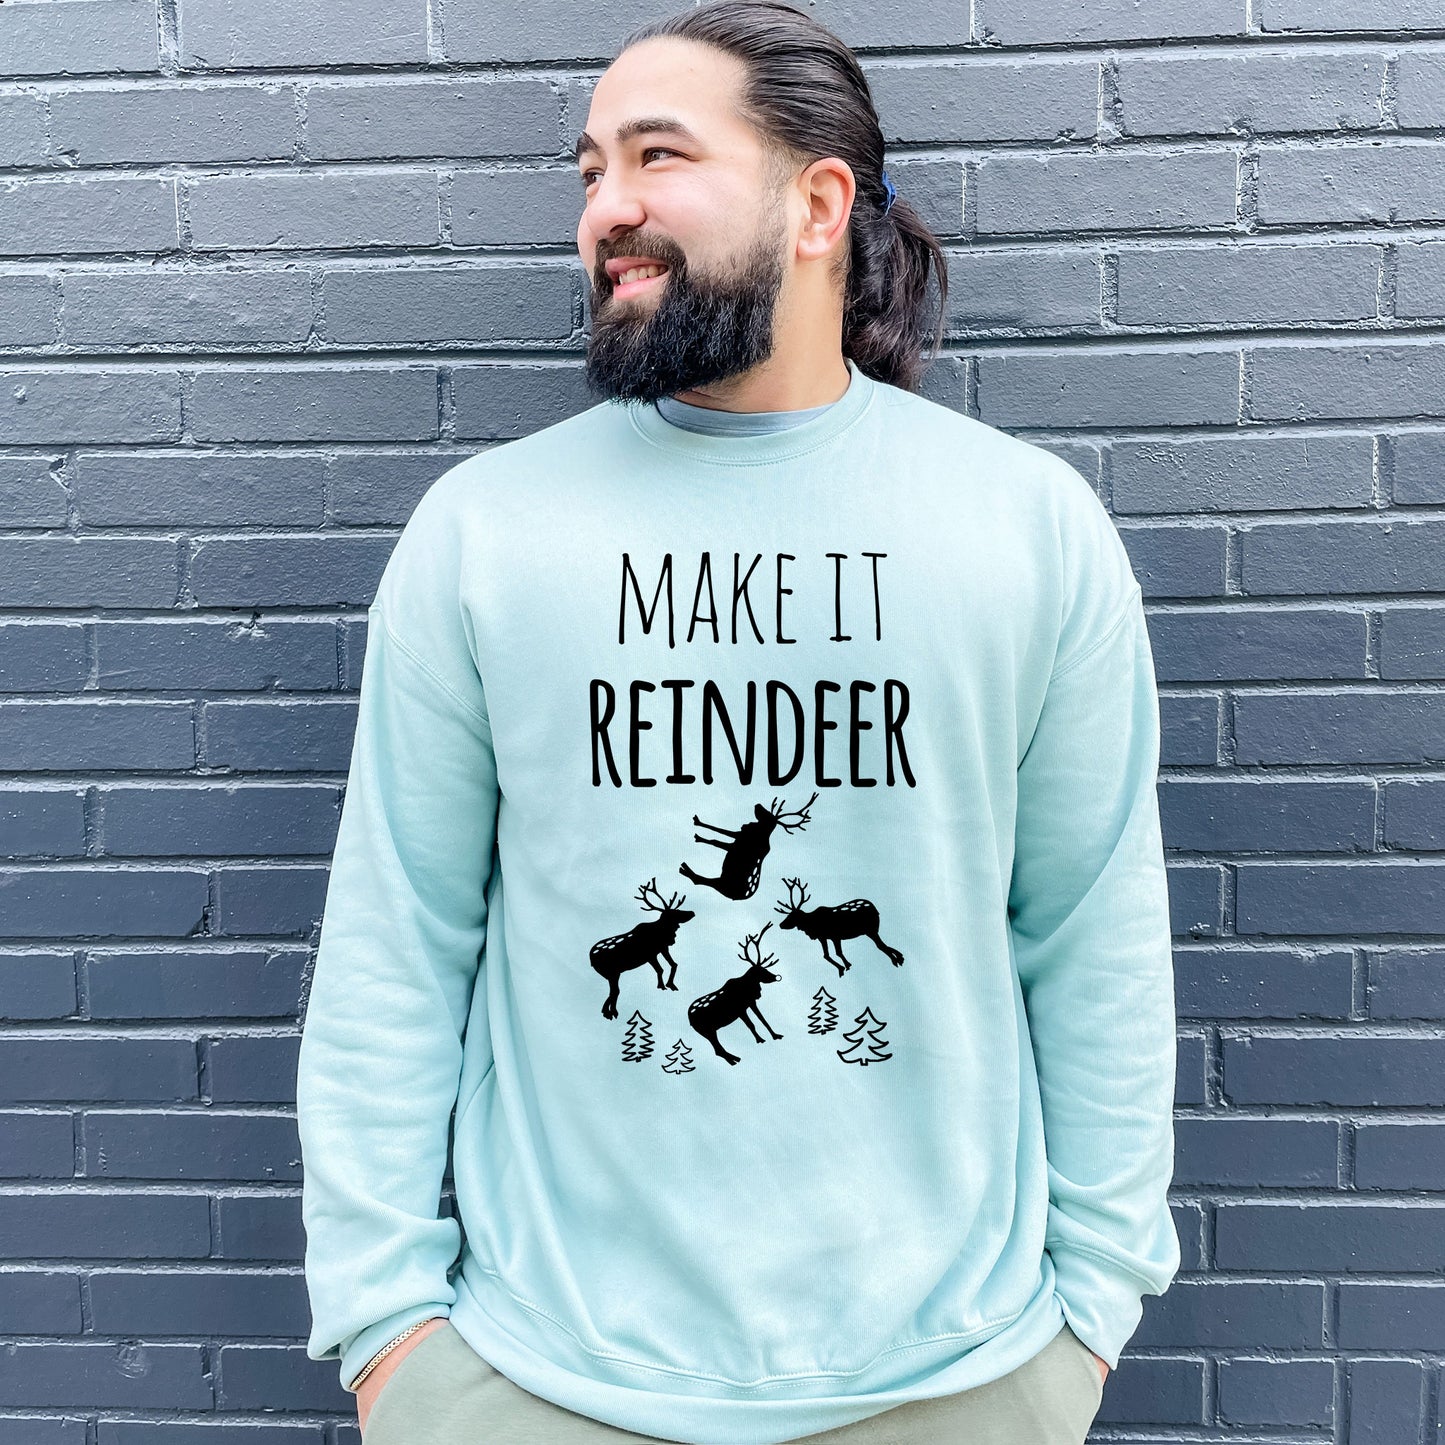 Make It Reindeer - Unisex Sweatshirt - Heather Gray or Dusty Blue